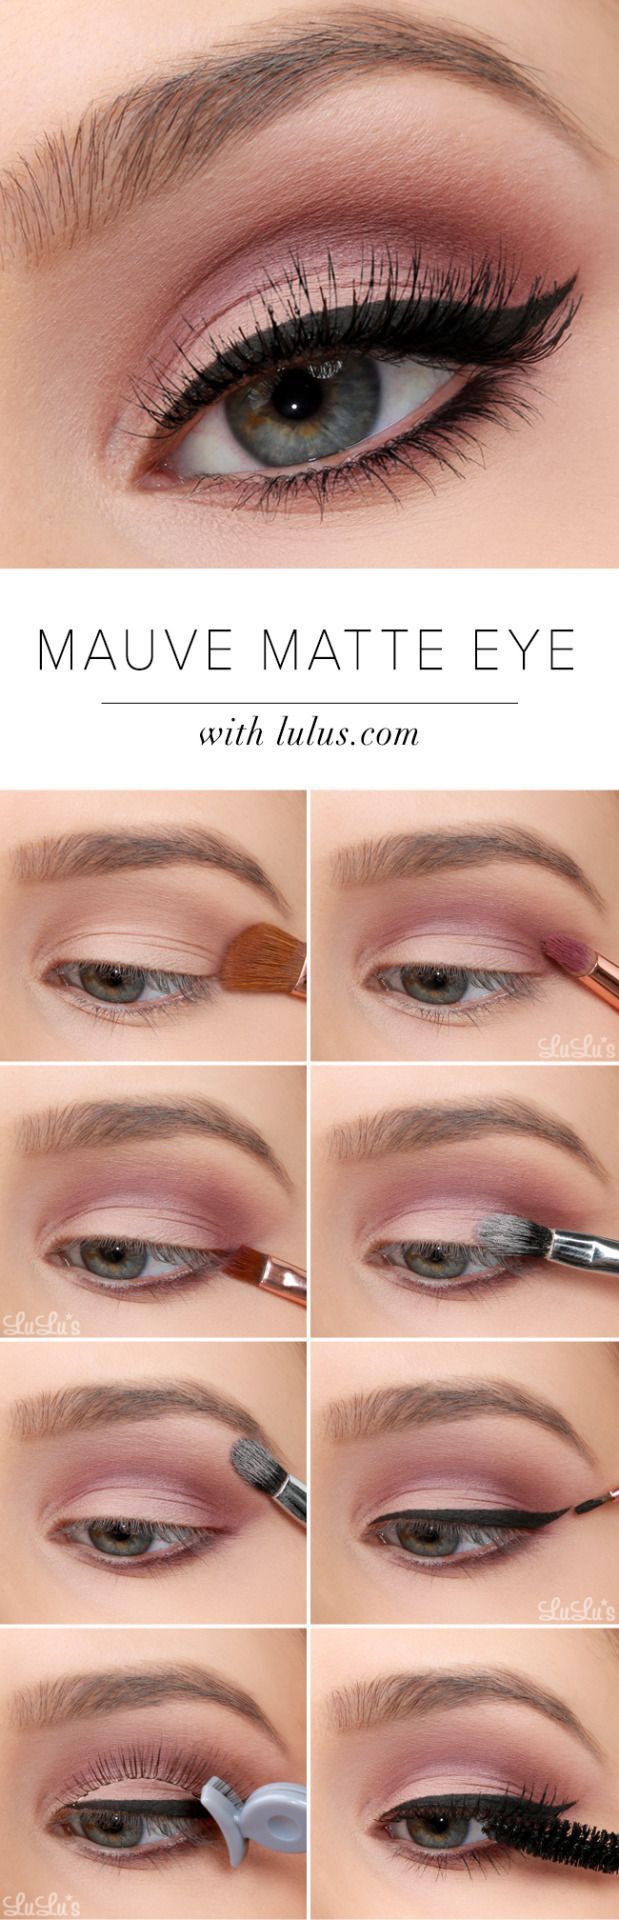 How-To: Mauve Matte Eye Tutorial